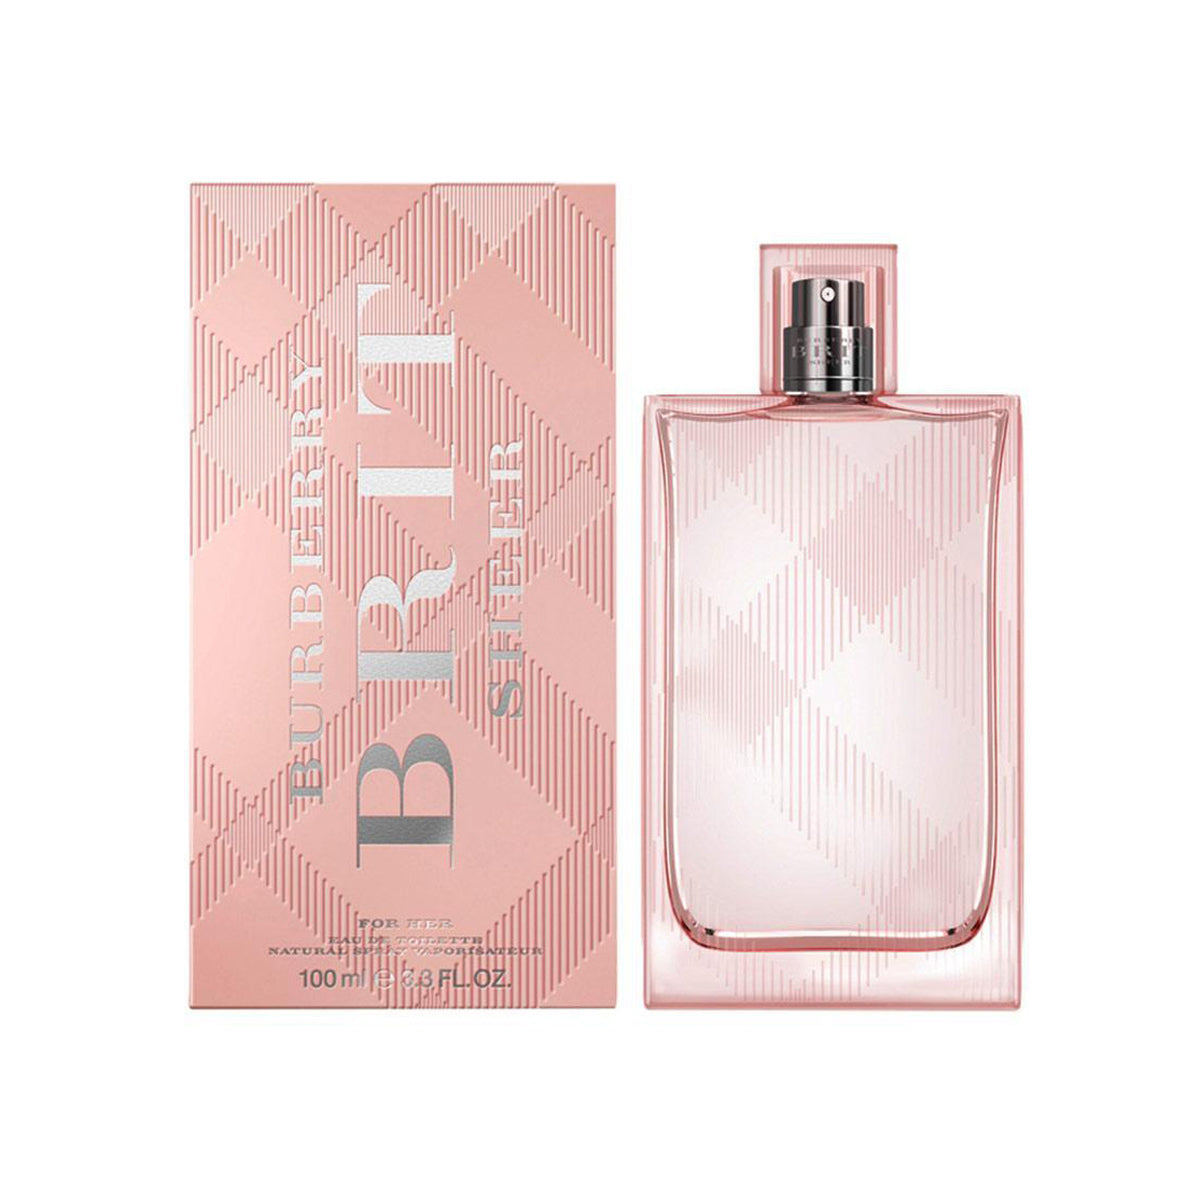 Burberry Brit Sheer for Women - Eau de Toilette, 100ml - samawa perfumes 